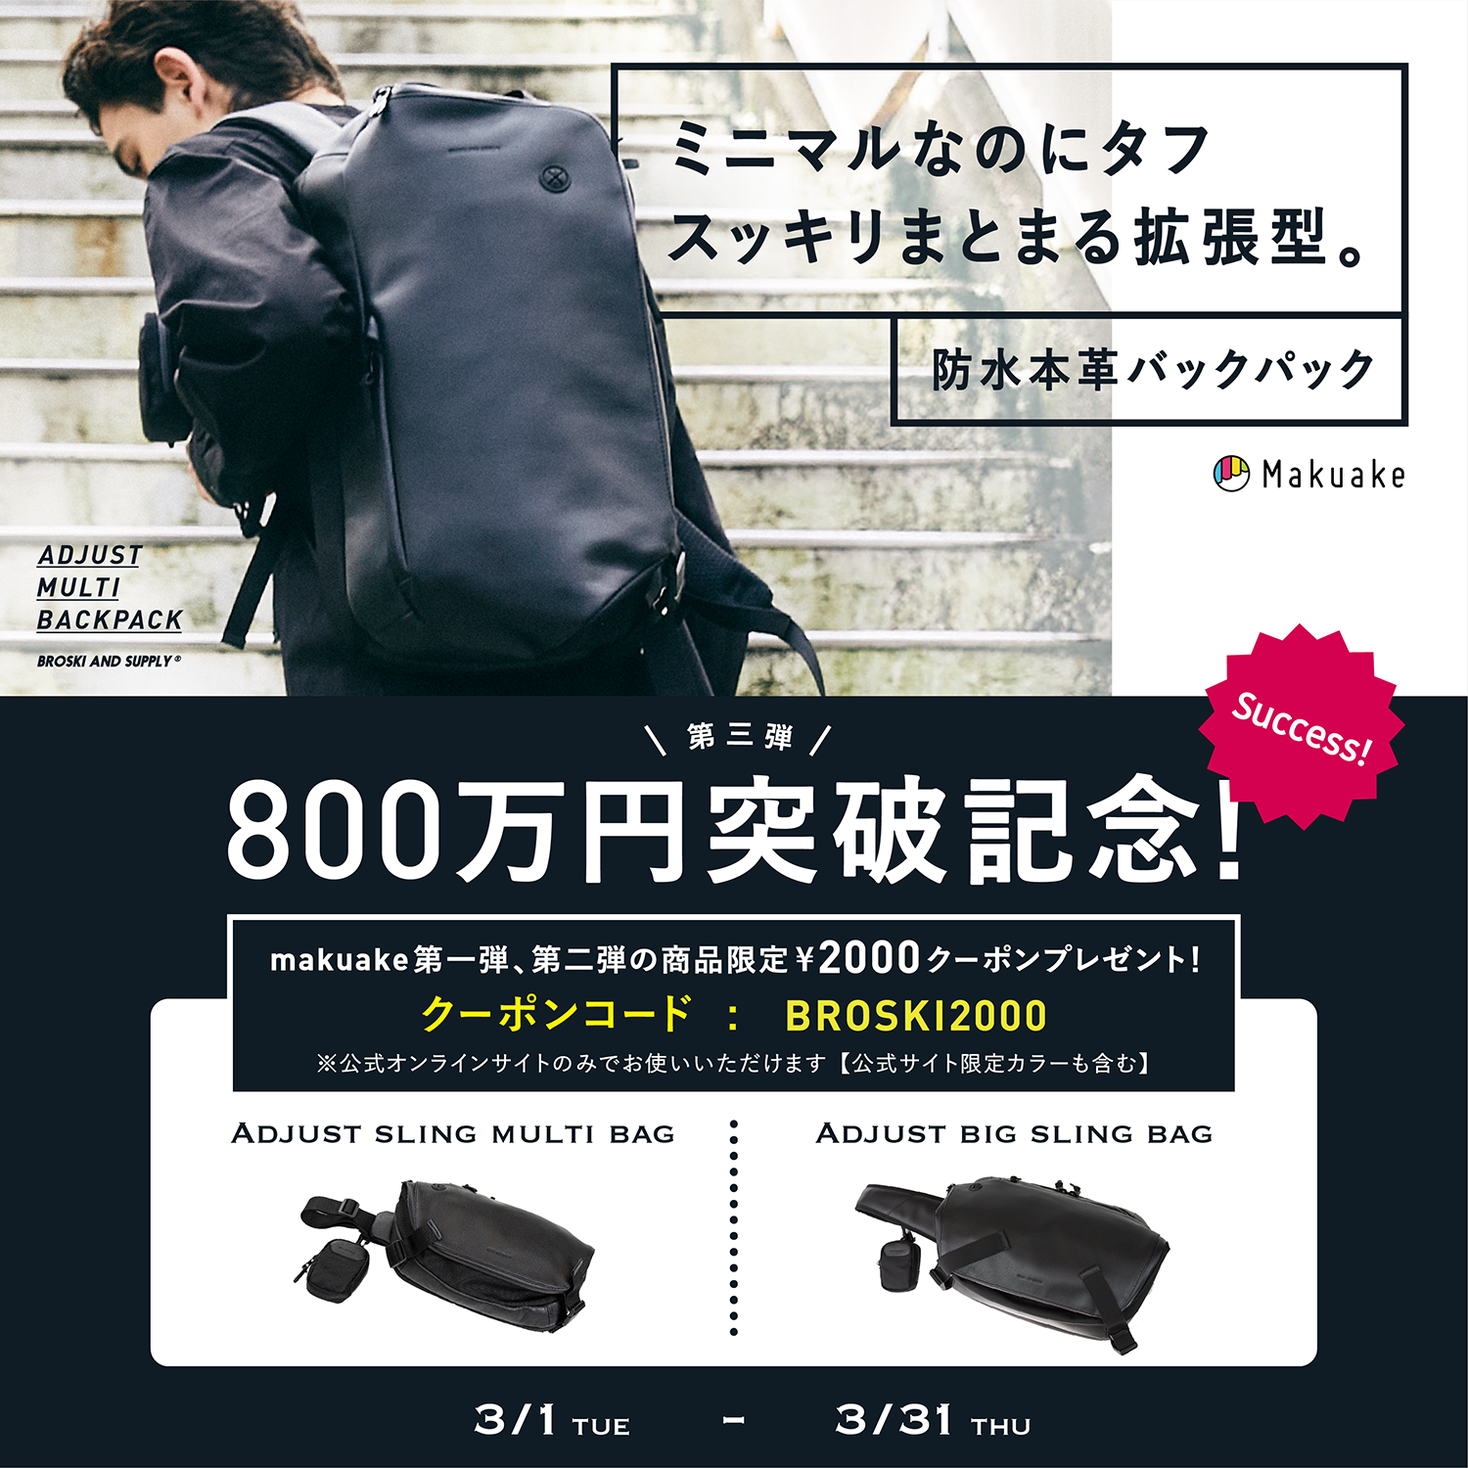 Adjust sling multi bag ＋ ミニポーチ-